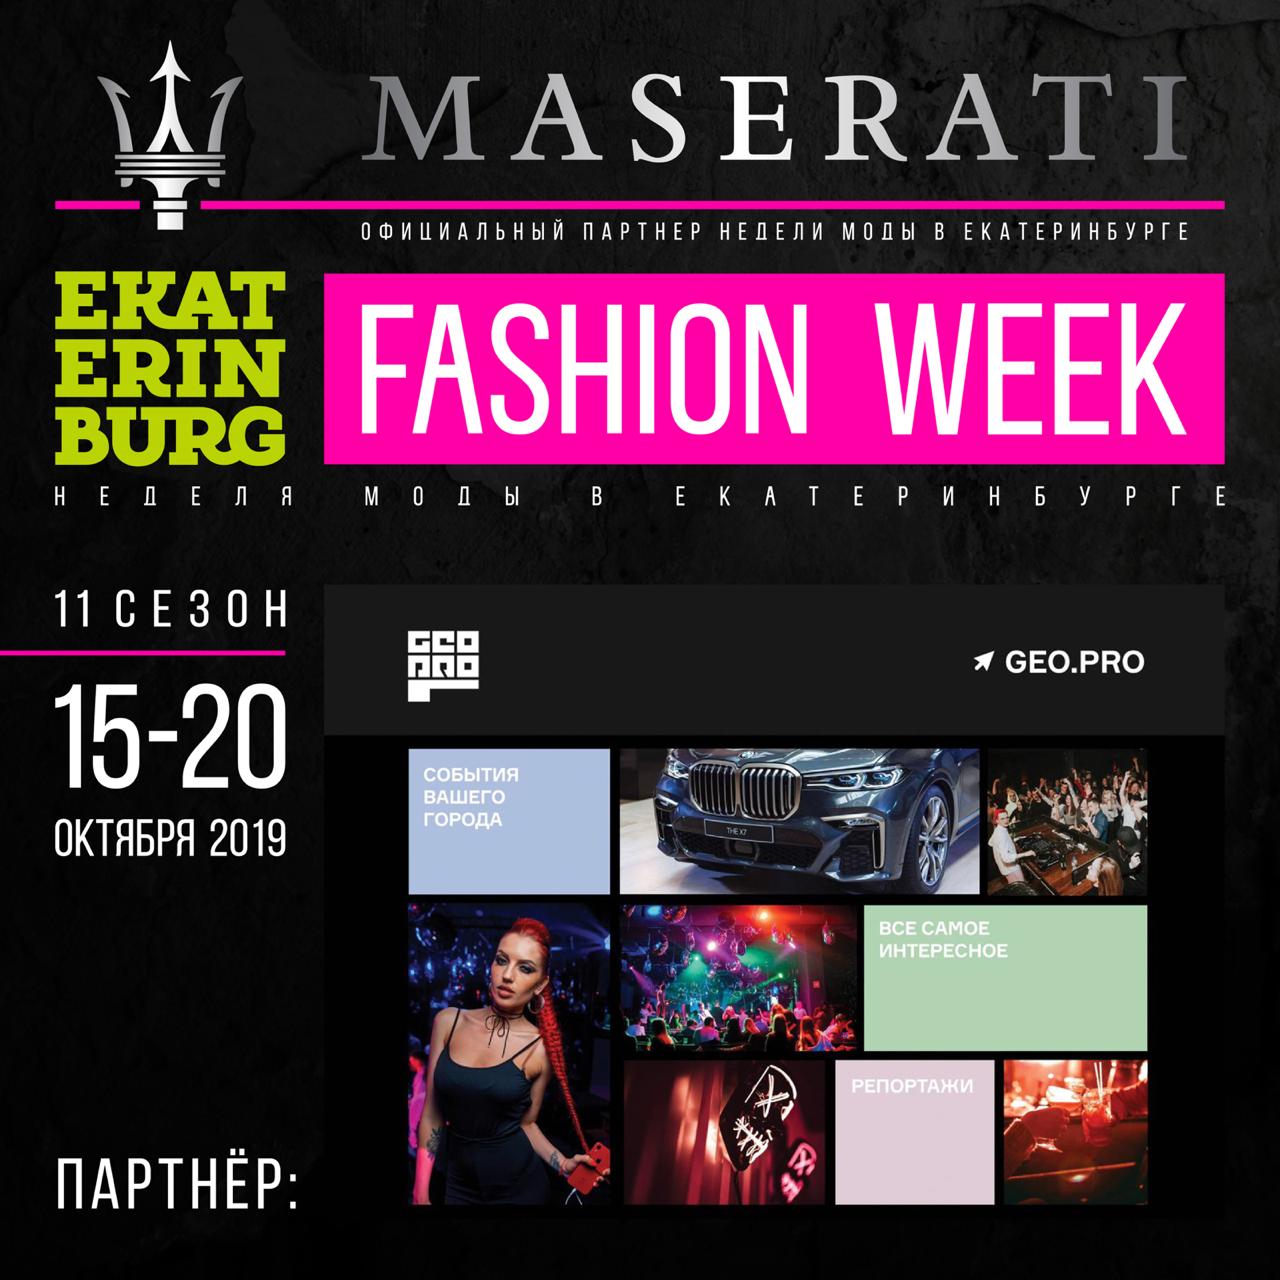 GEO.PRO - партнер Ekaterinburg Fashion Week